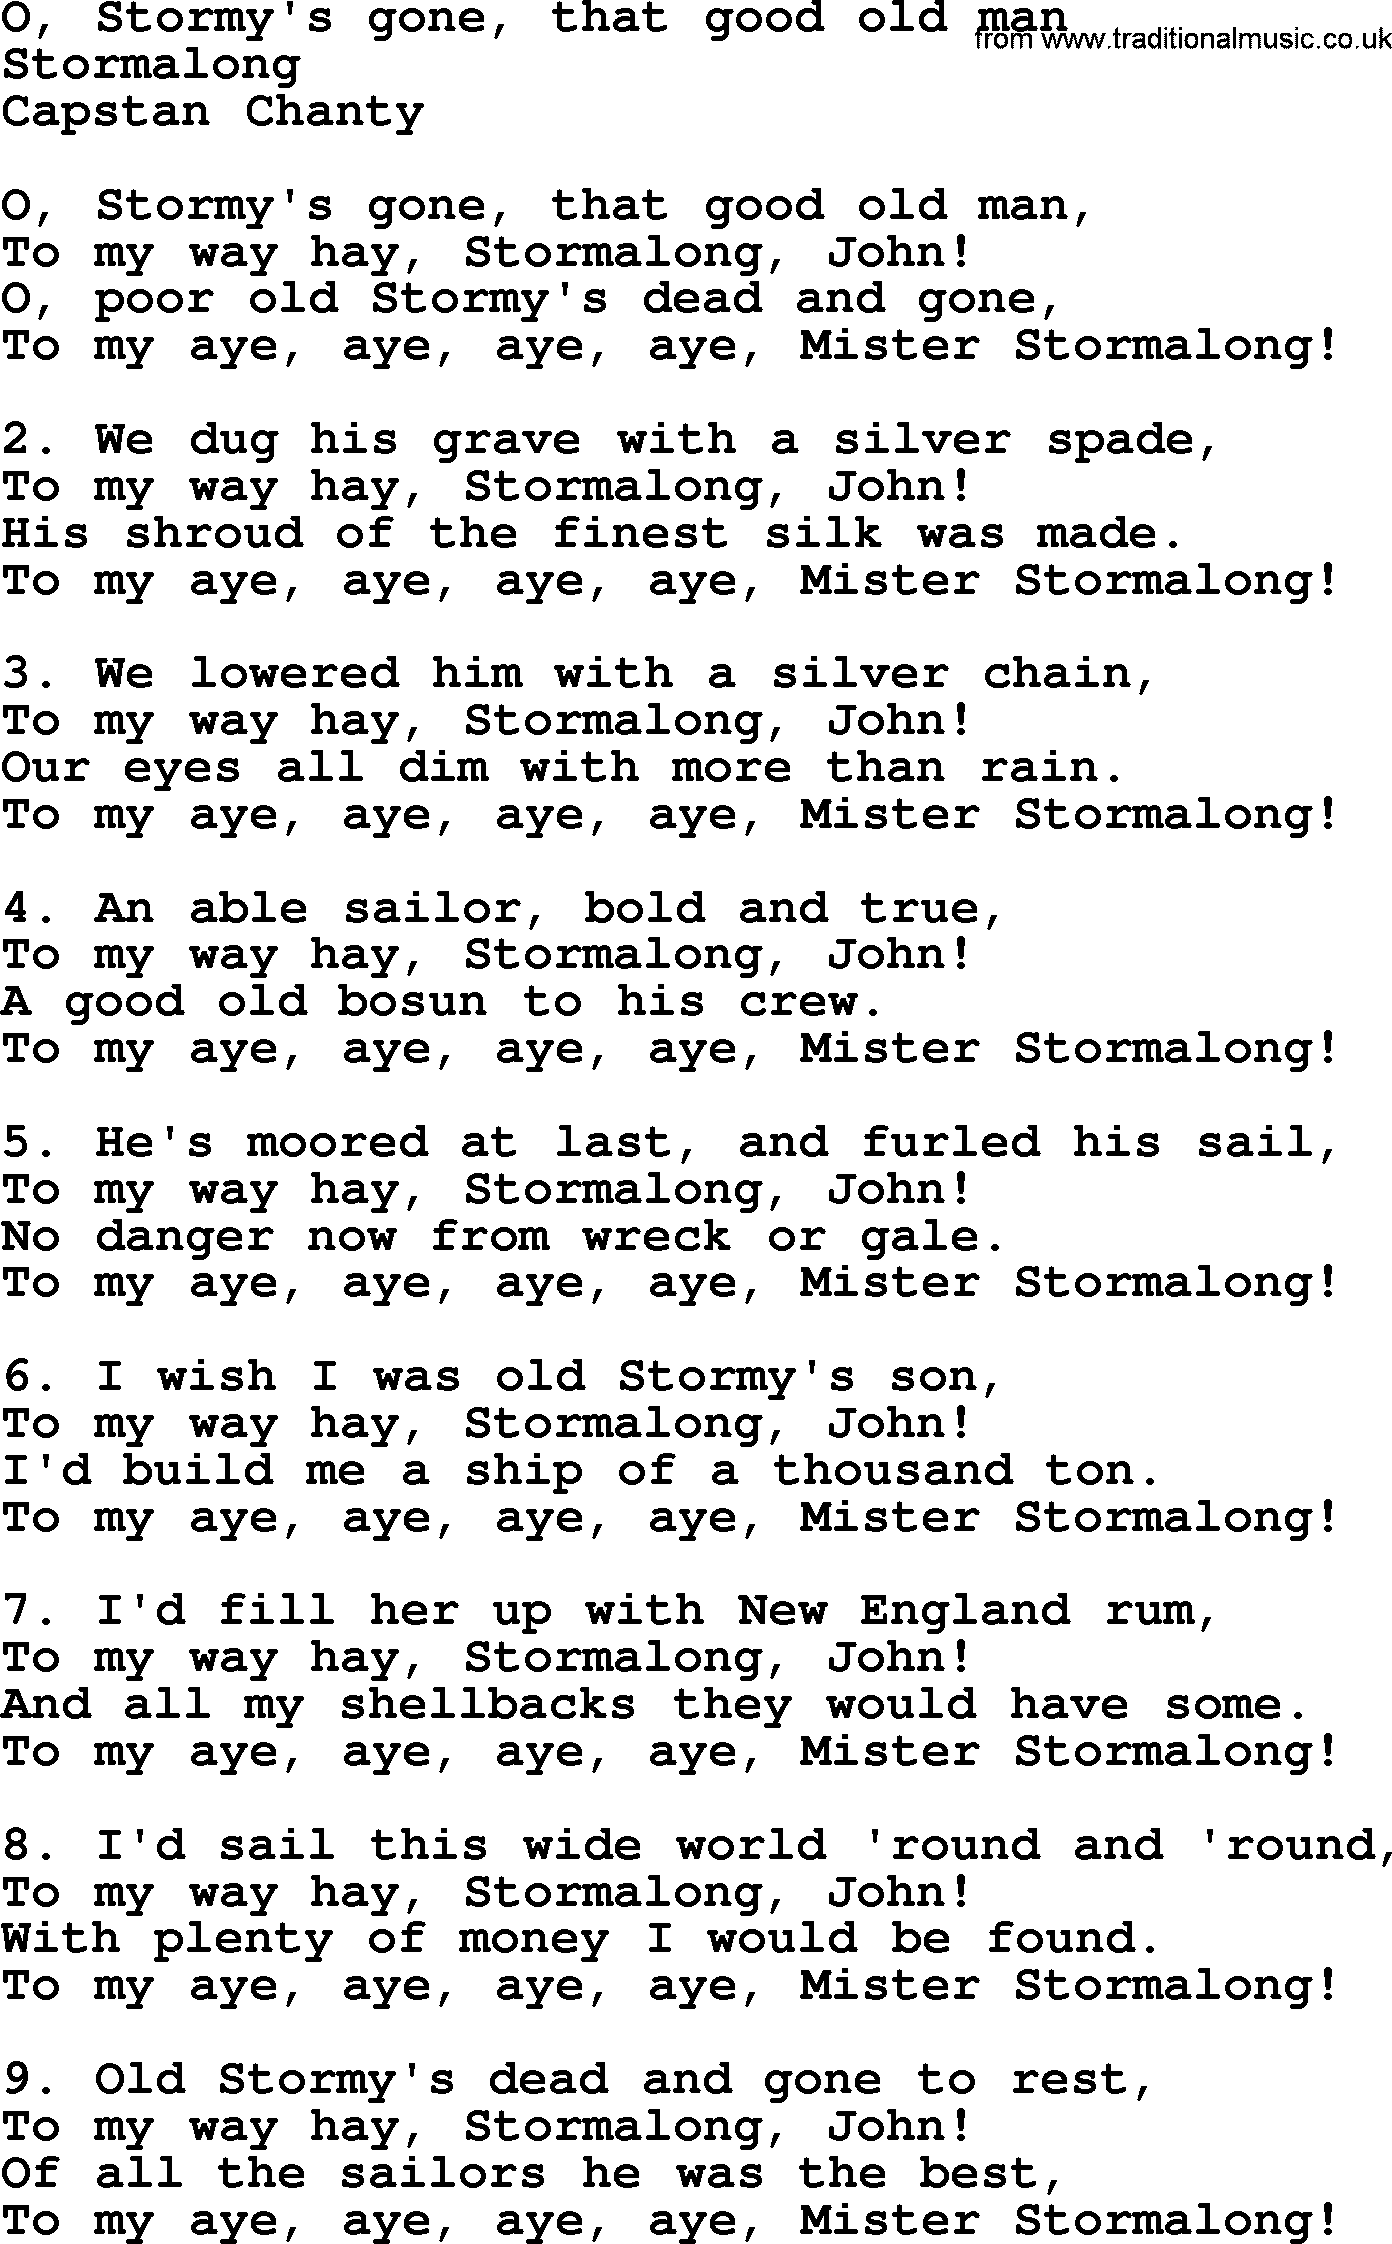 Sea Song or Shantie: O Stormys Gone That Good Old Man, lyrics